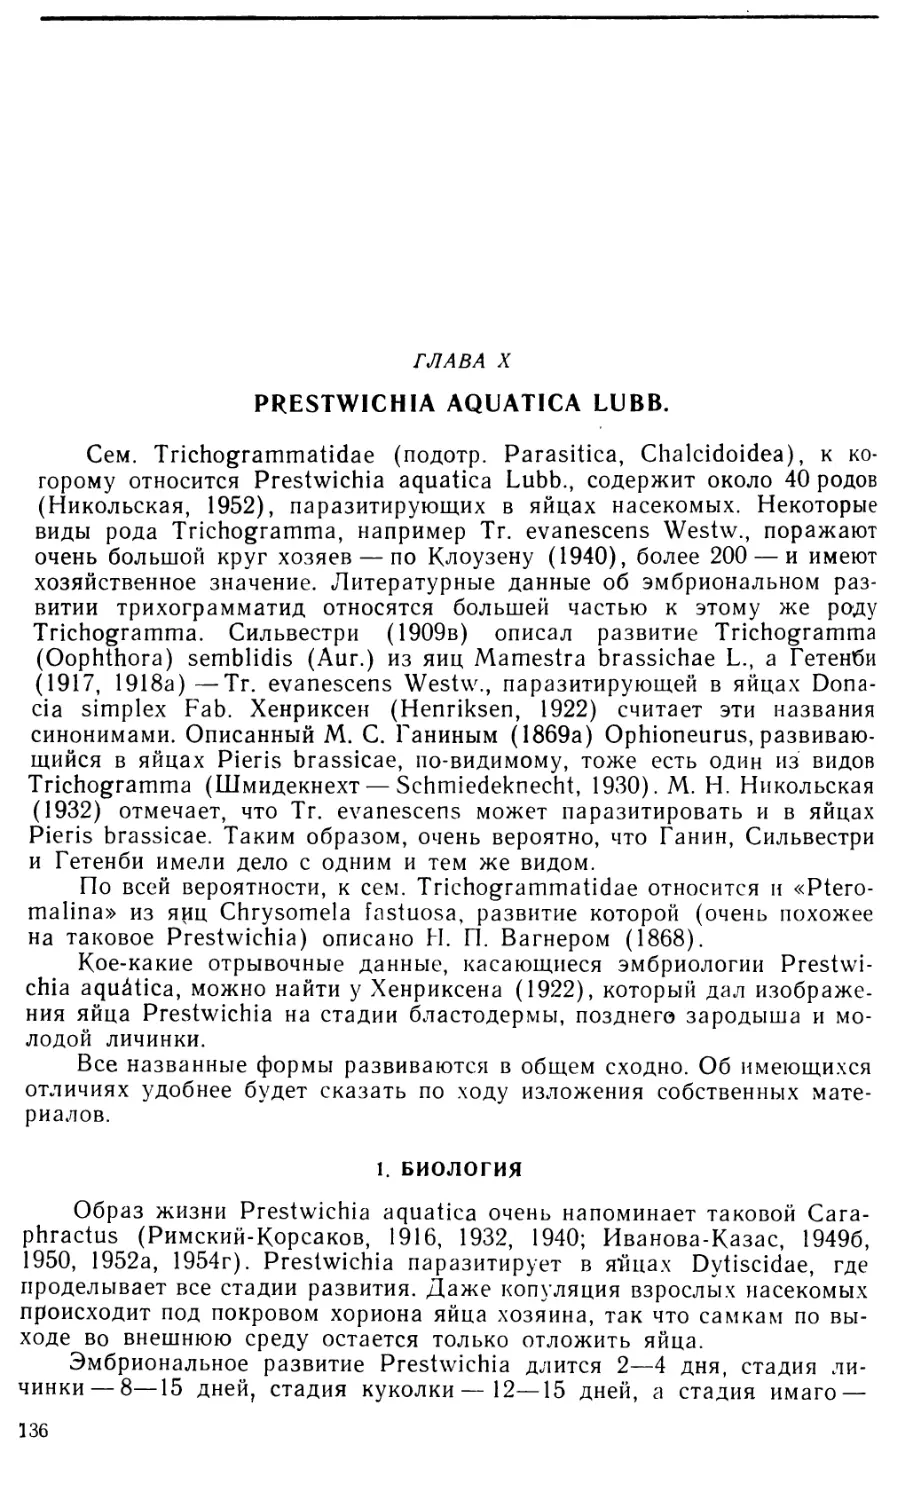 Глава X. Prestwichia aquatica Lubb.